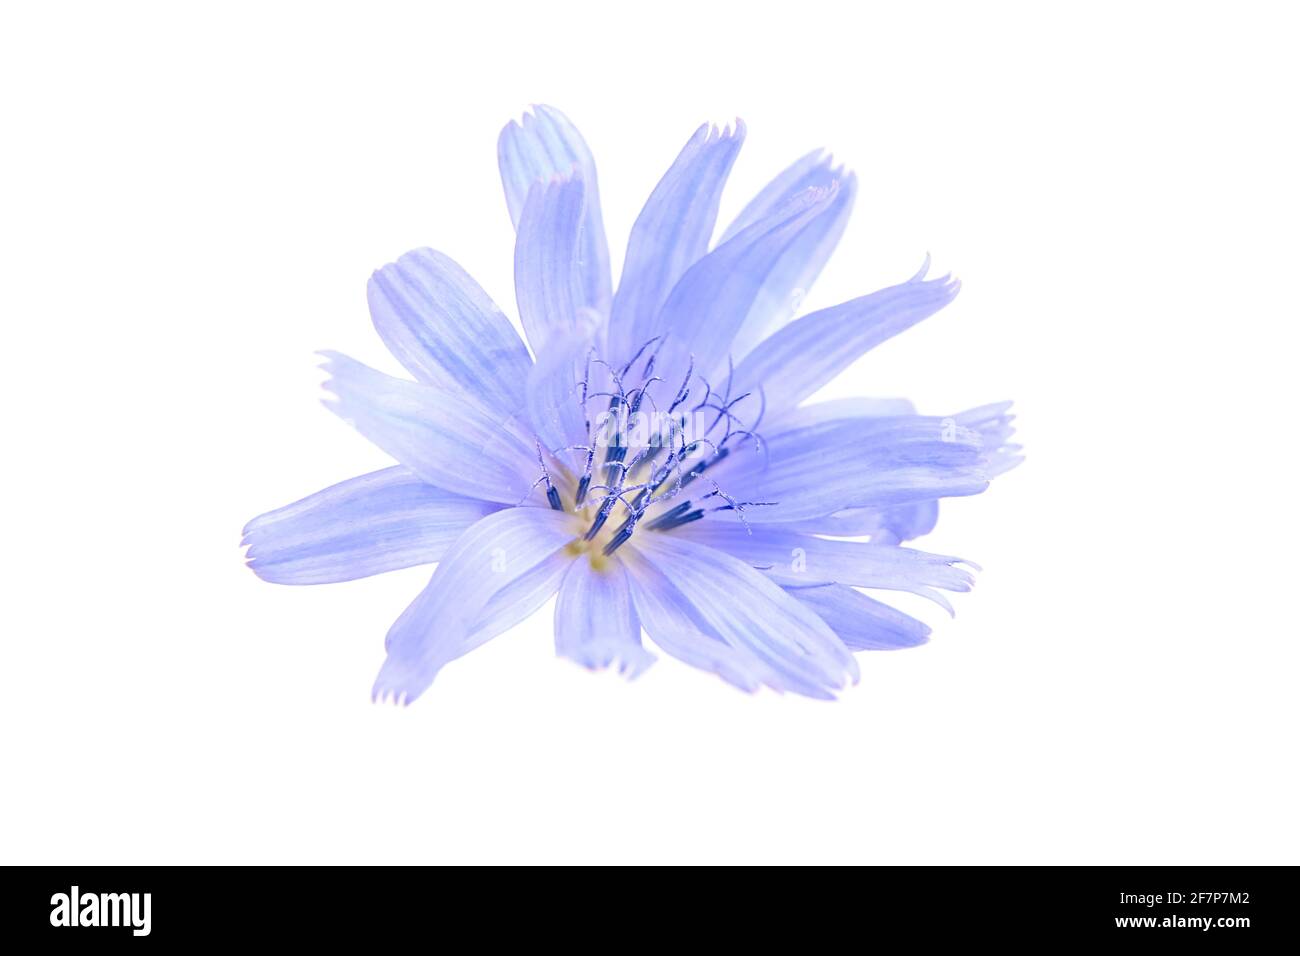 Achicoria flor azul planta aislada sobre fondo blanco. Flor única con pétalos azules brillantes Foto de stock